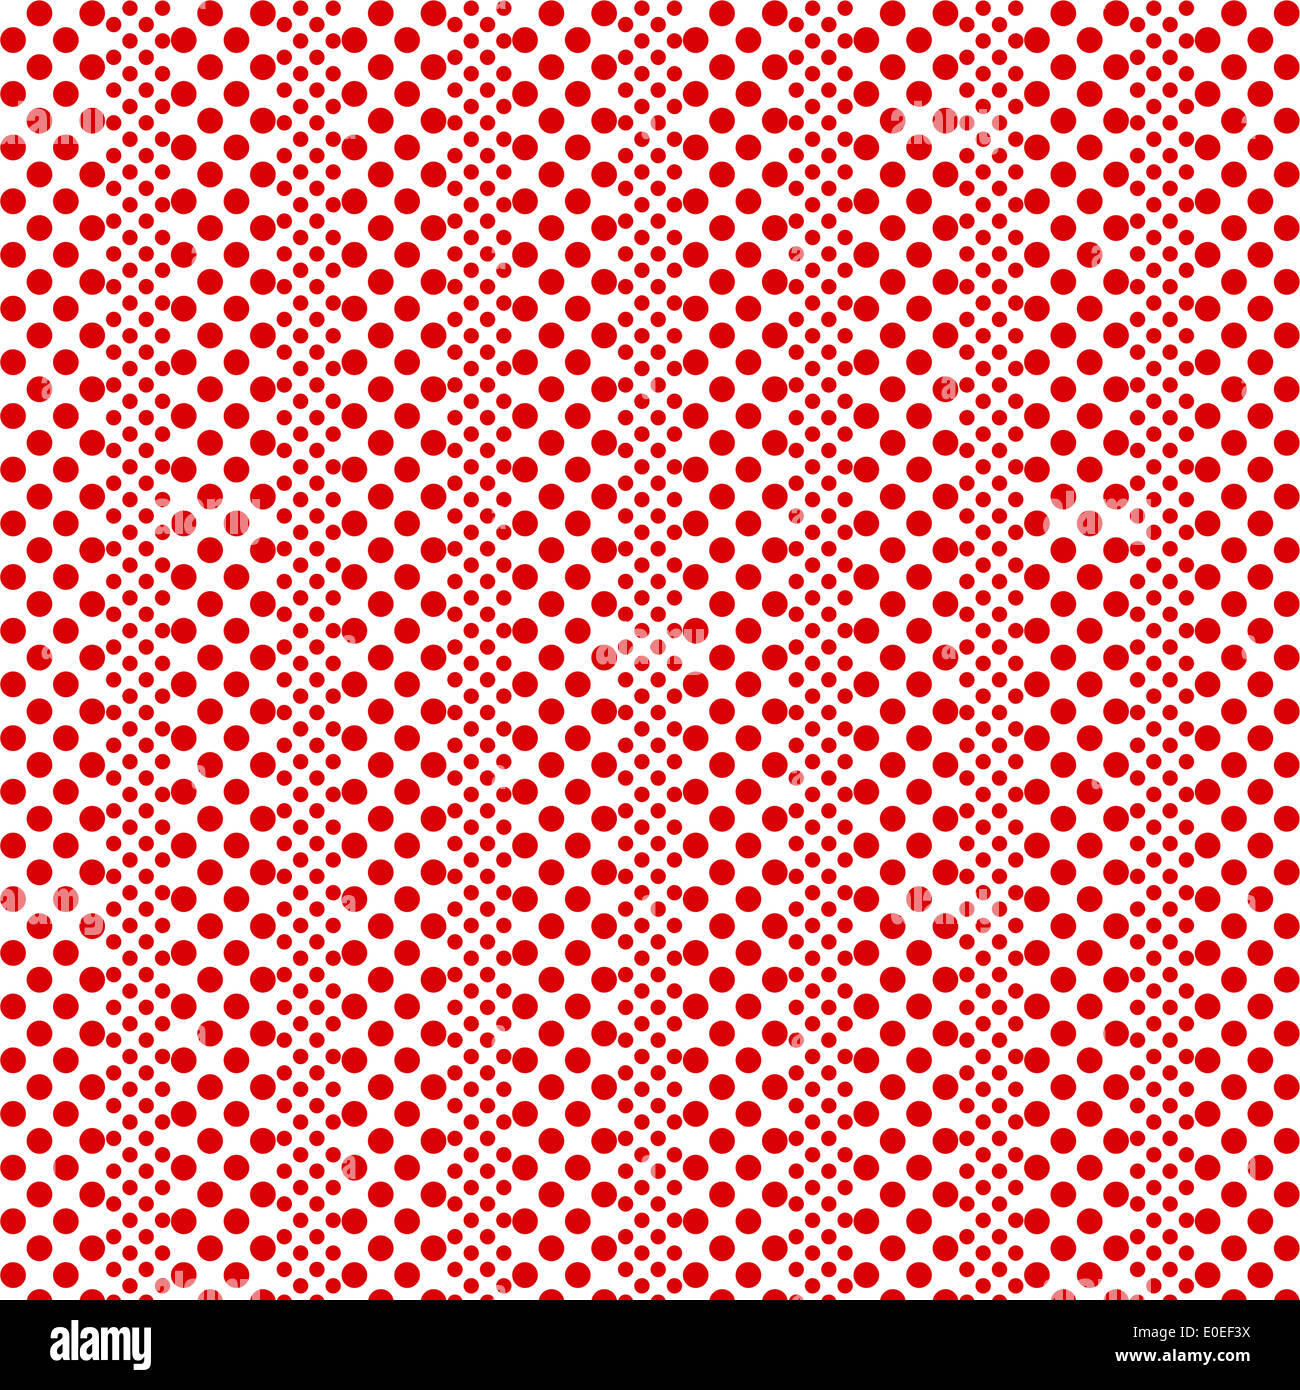 Background of seamless dots pattern Stock Photo